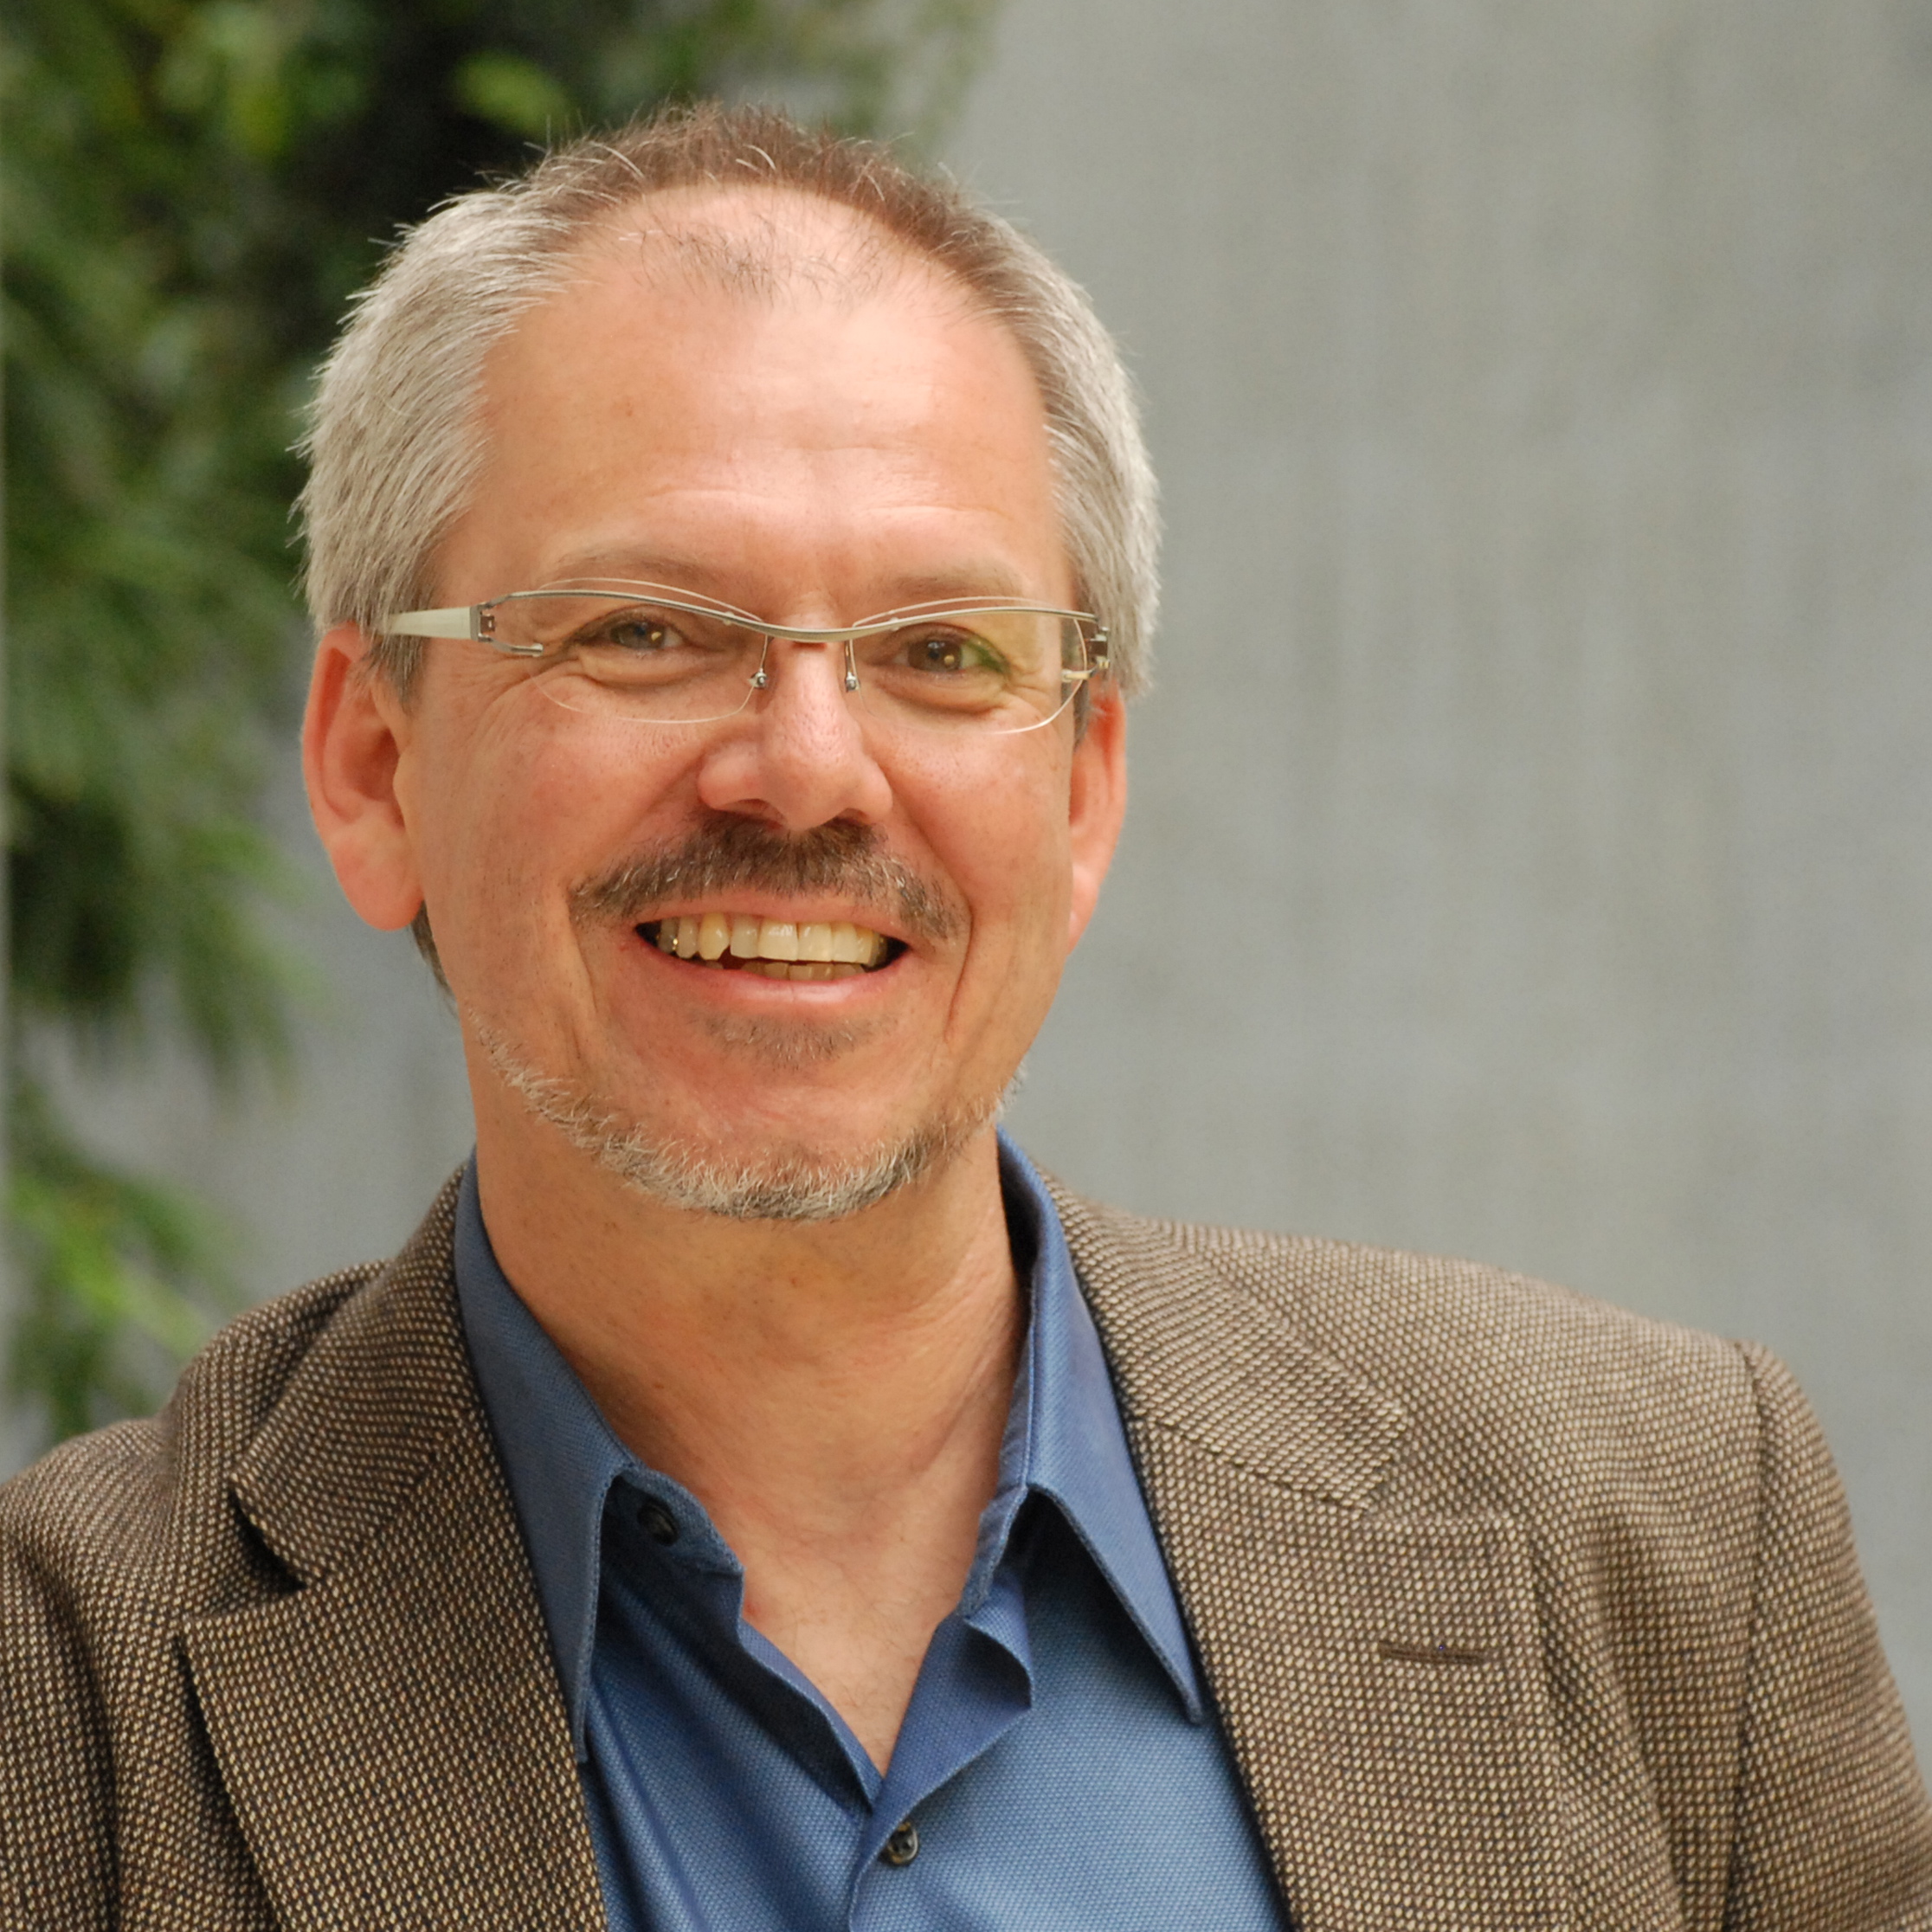 A imagem mostra o Prof. Dr. Frank Allgöwer